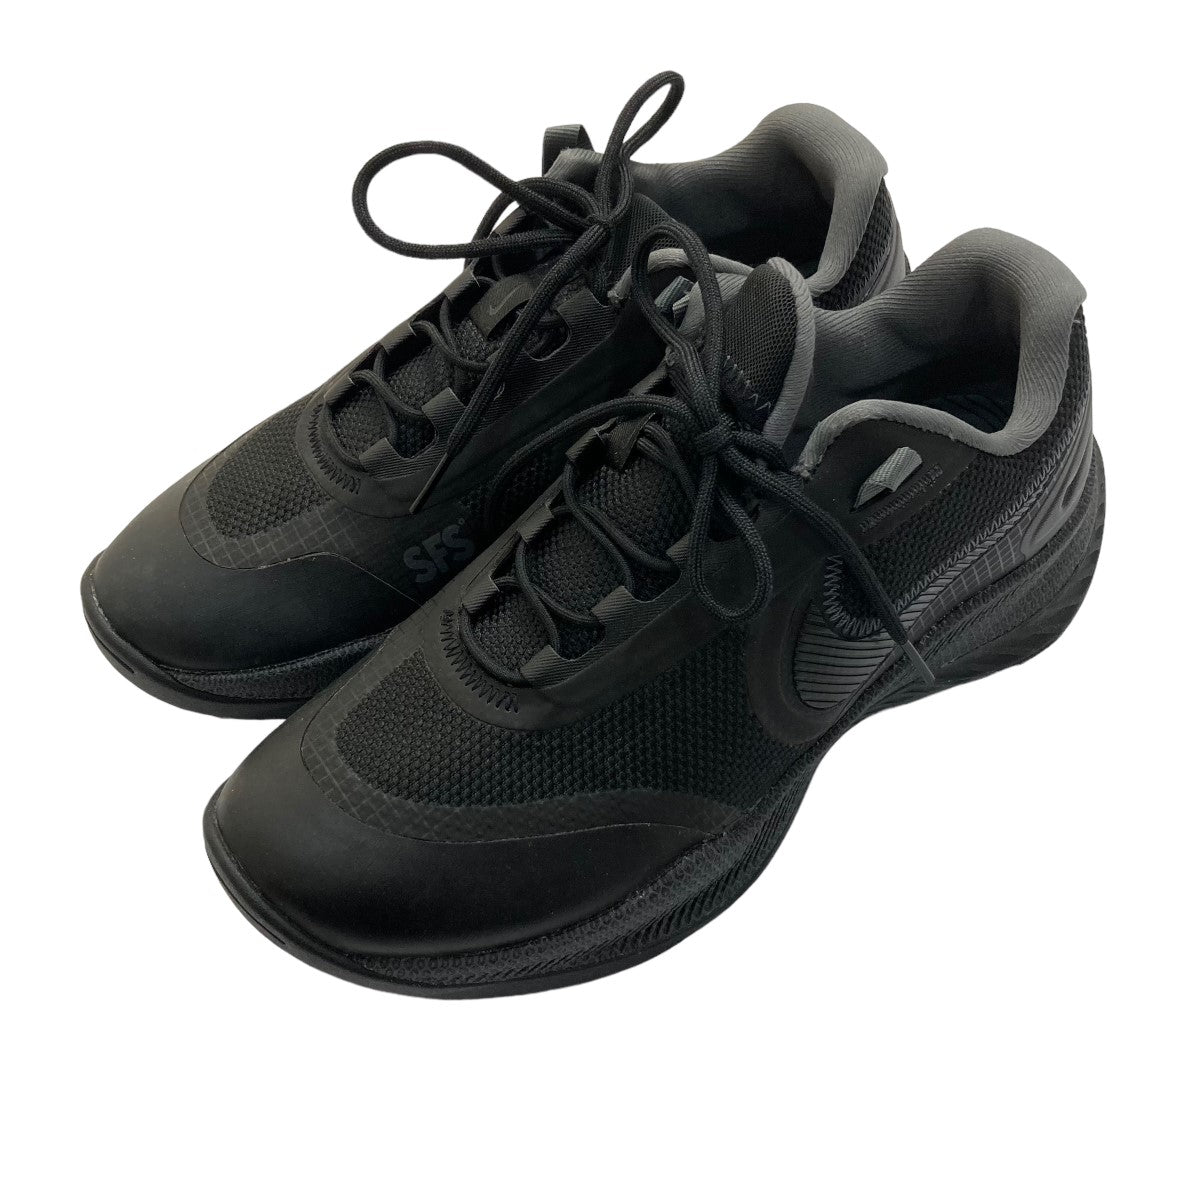 低価HOTNIKE REACT SFB CARBON LOW 新品 28.5cm 靴